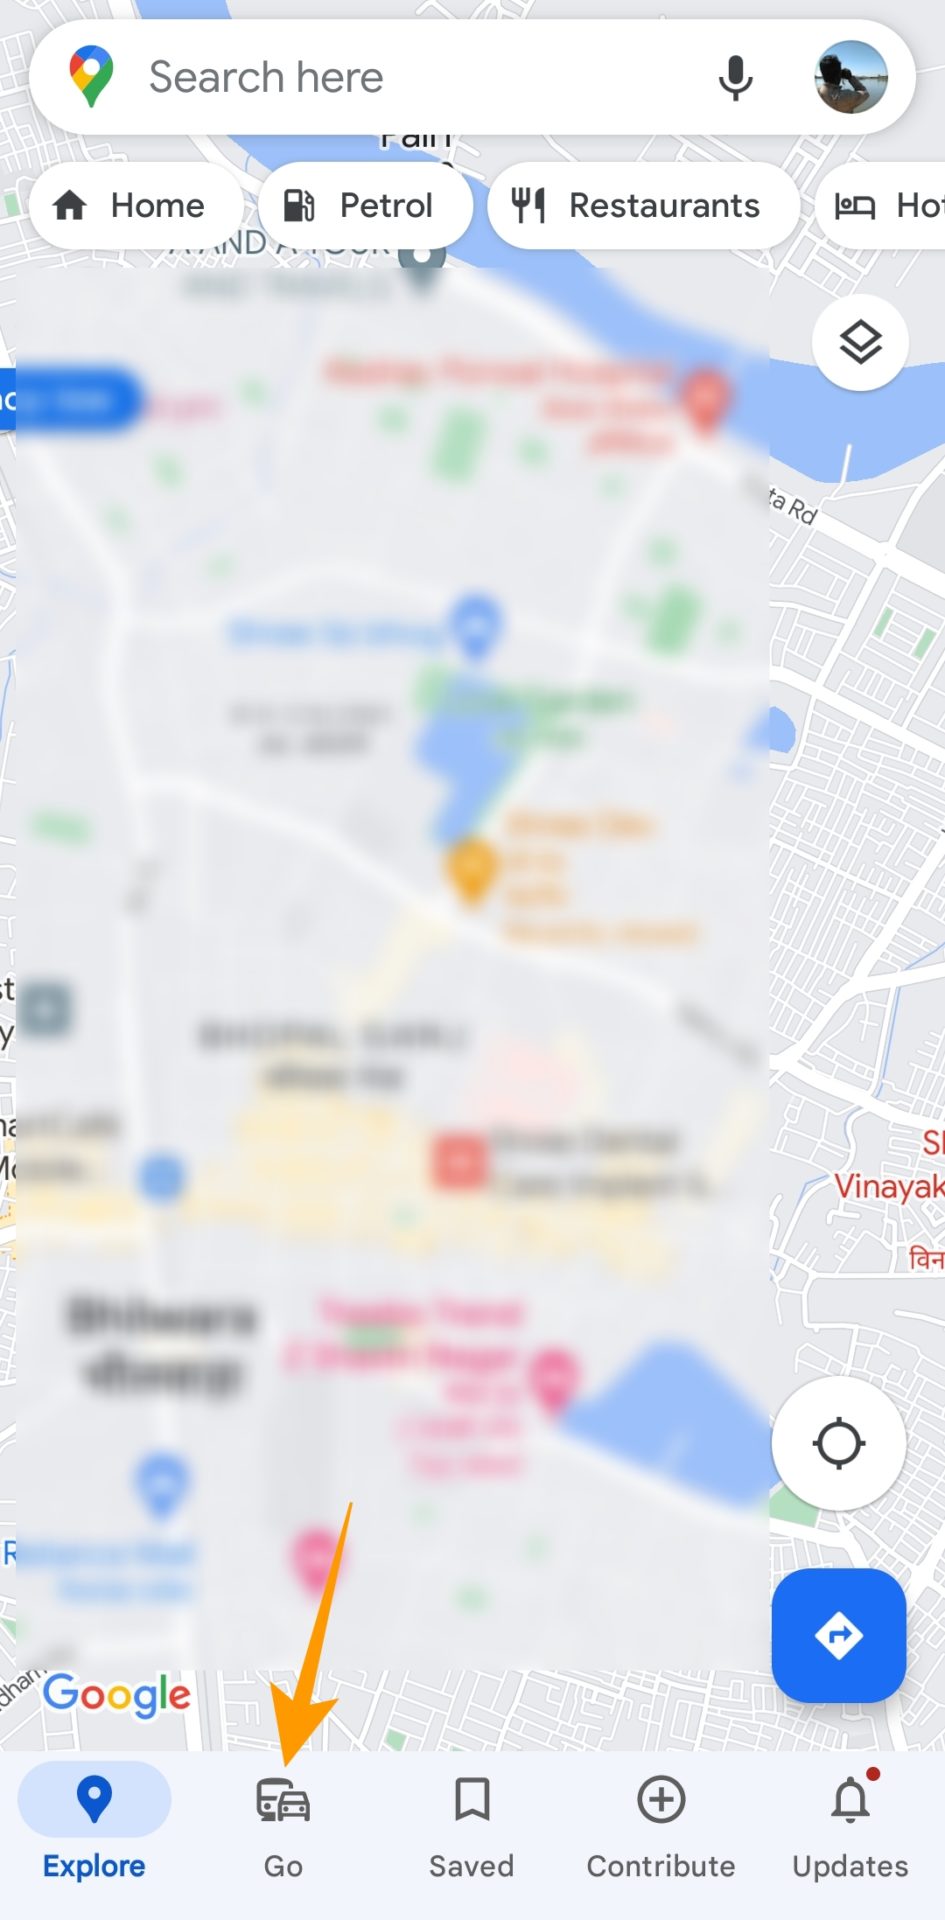 Go option in Google Maps